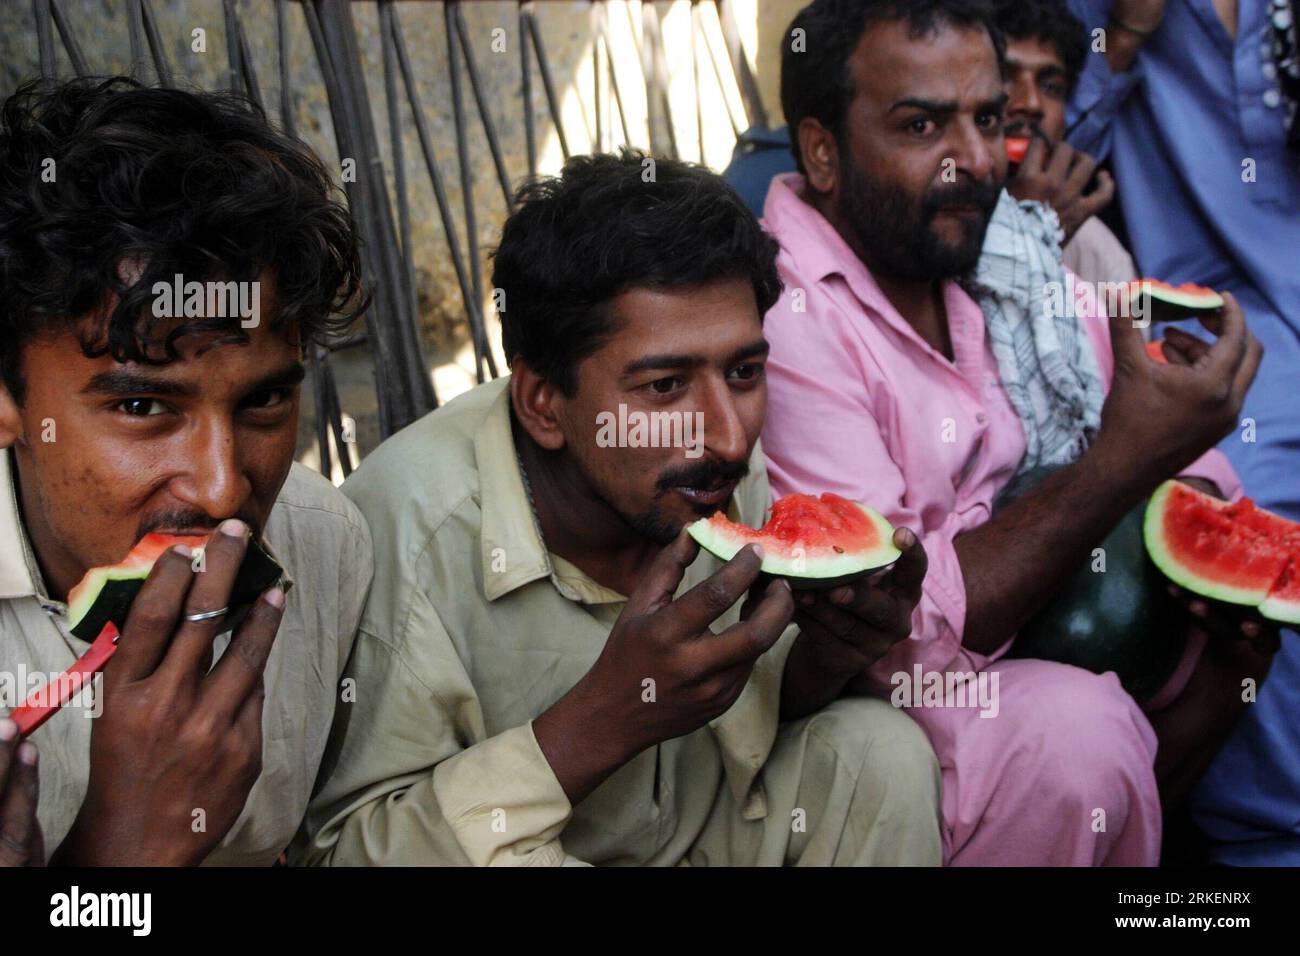 Bildnummer: 55280231  Datum: 21.04.2011  Copyright: imago/Xinhua (110421) -- LAHORE, April 21, 2011 (Xinhua) -- Pakistani laborers eat watermelons at a fruit market in eastern Pakistan s Lahore, on April 21, 2011. (Xinhua/Jamil Ahmed) (lyi) PAKISTAN-LAHORE-WATERMELON PUBLICATIONxNOTxINxCHN Gesellschaft Wirtschaft Markt Wassermelone Wassermelonen Melone Melonen kbdig xsk 2011 quer o0 Essen, Land, Leute    Bildnummer 55280231 Date 21 04 2011 Copyright Imago XINHUA  Lahore April 21 2011 XINHUA Pakistani Laborers Eat Watermelons AT a Fruit Market in Eastern Pakistan S Lahore ON April 21 2011 XINHU Stock Photo